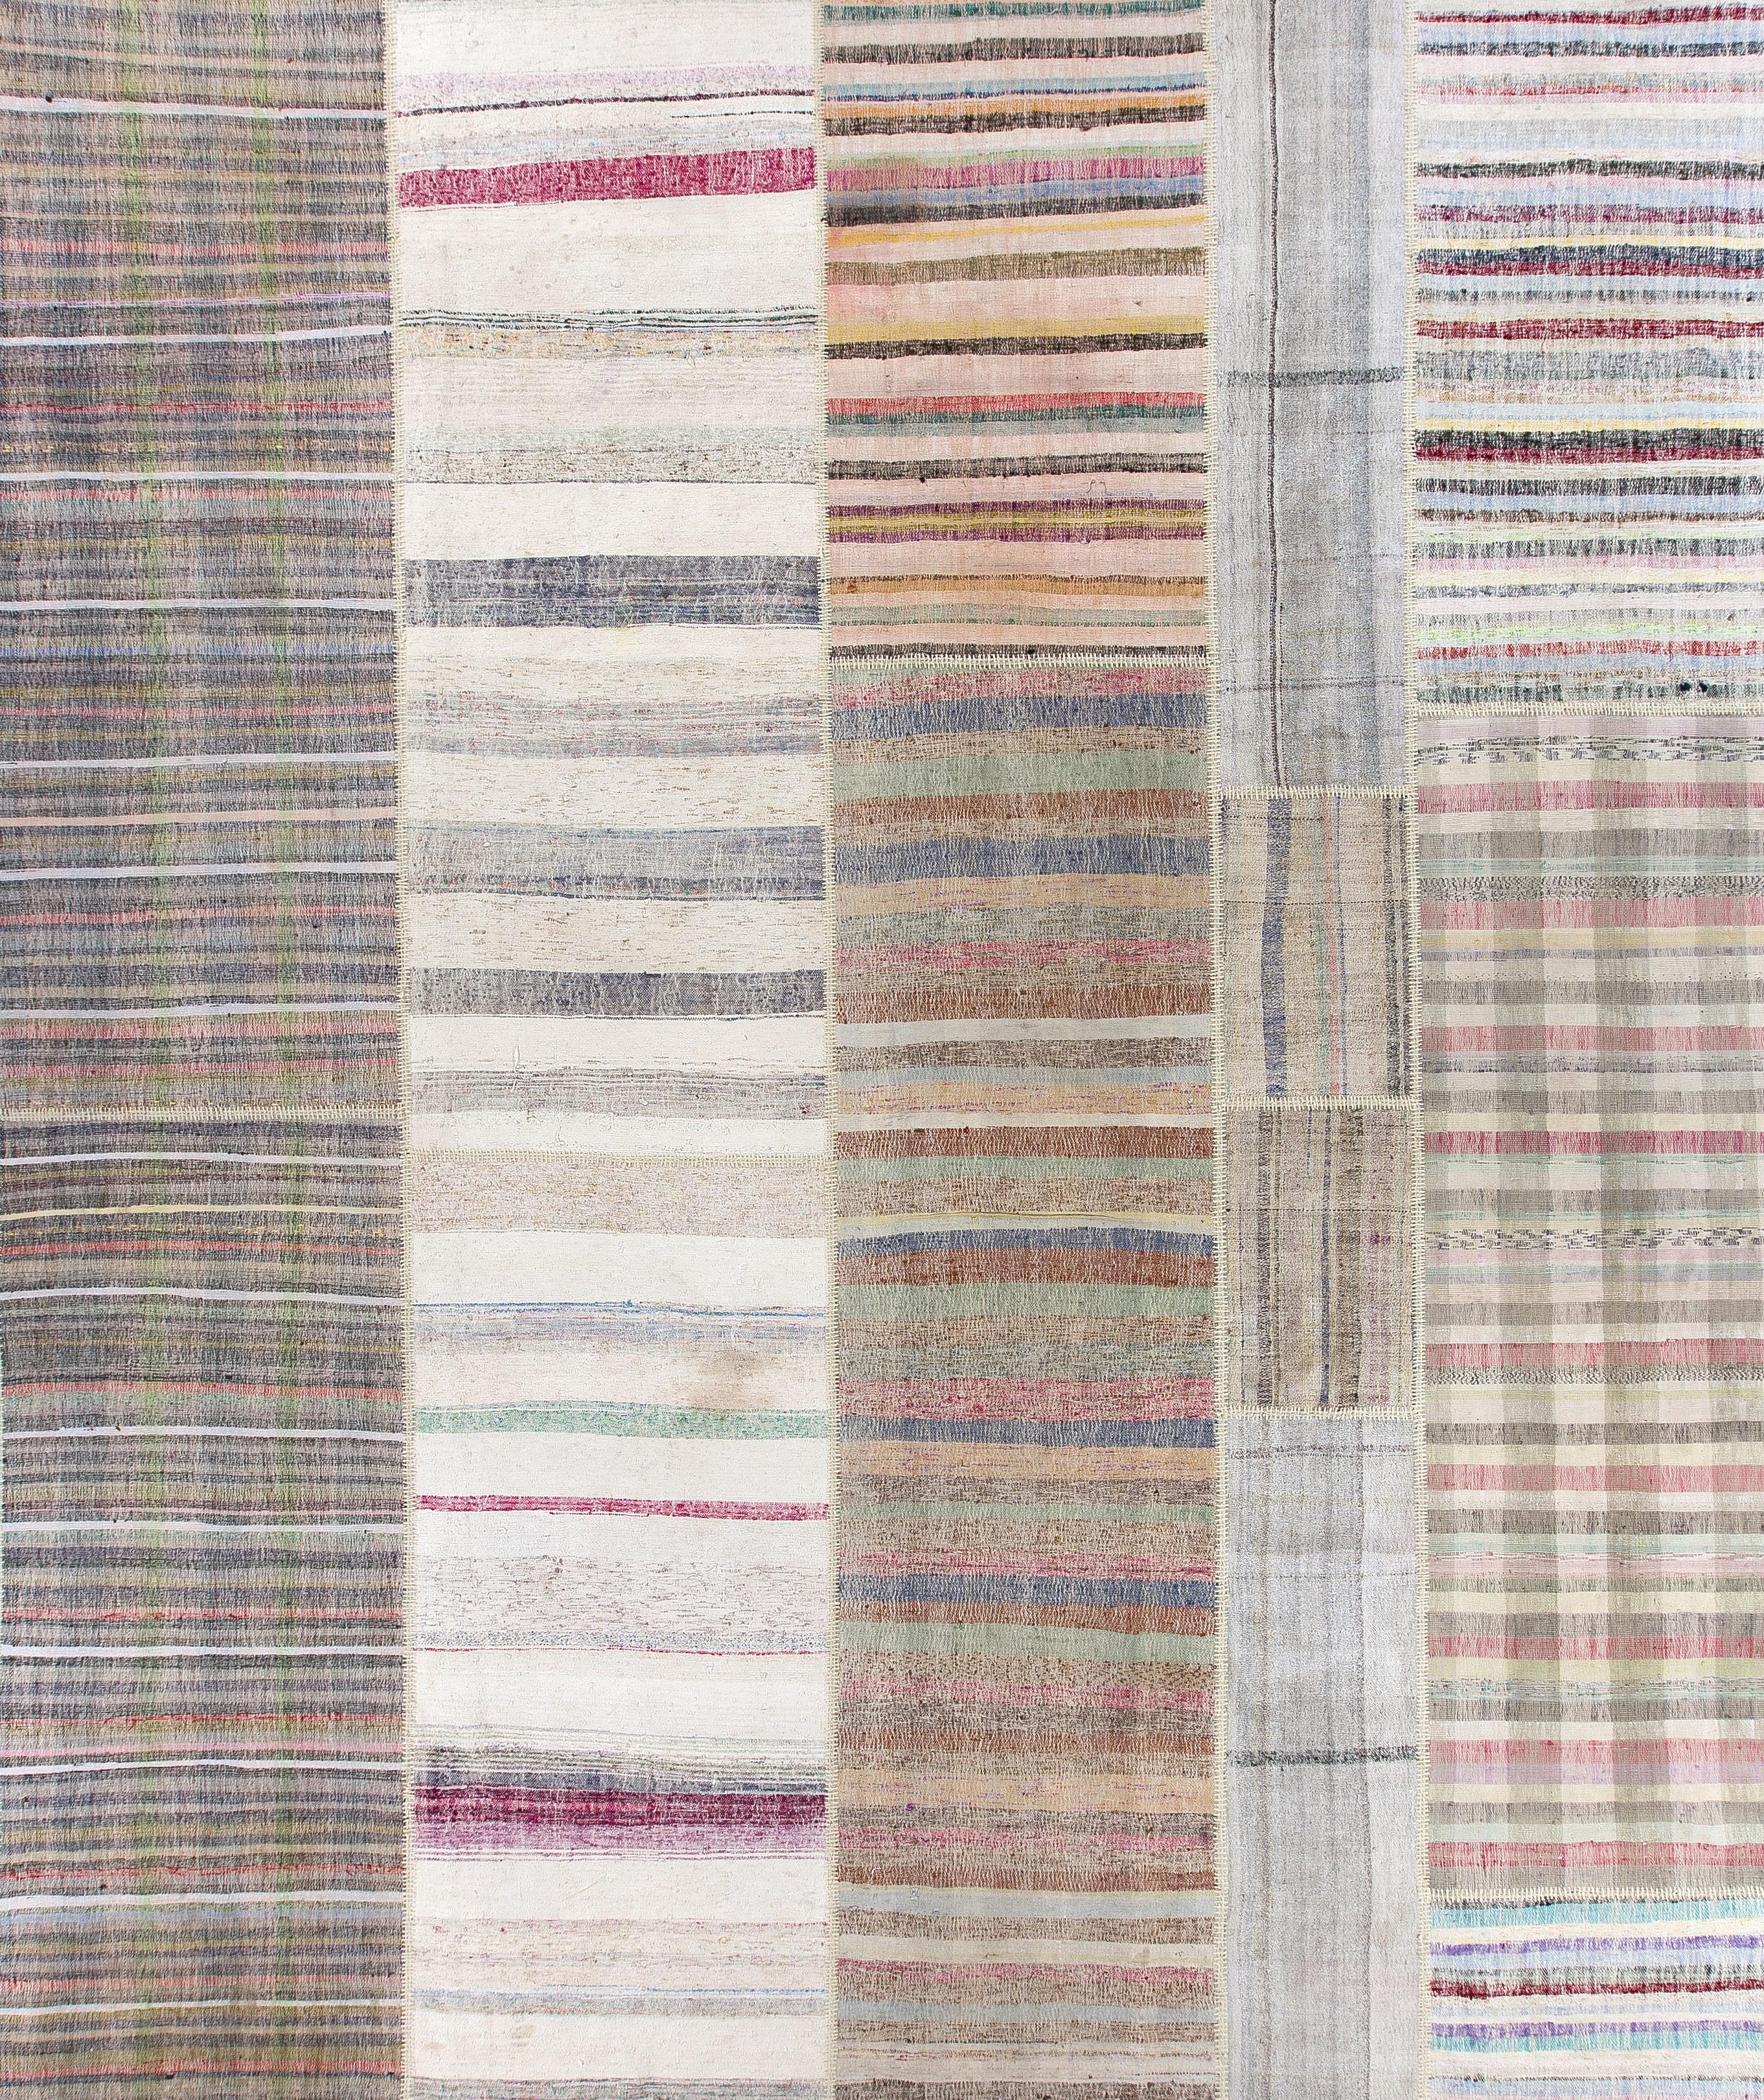 Hand-Woven 12.4x16.4 Ft Oversize Striped Cotton Colorful Rag Rug, Adjustable, Vintage Kilim For Sale